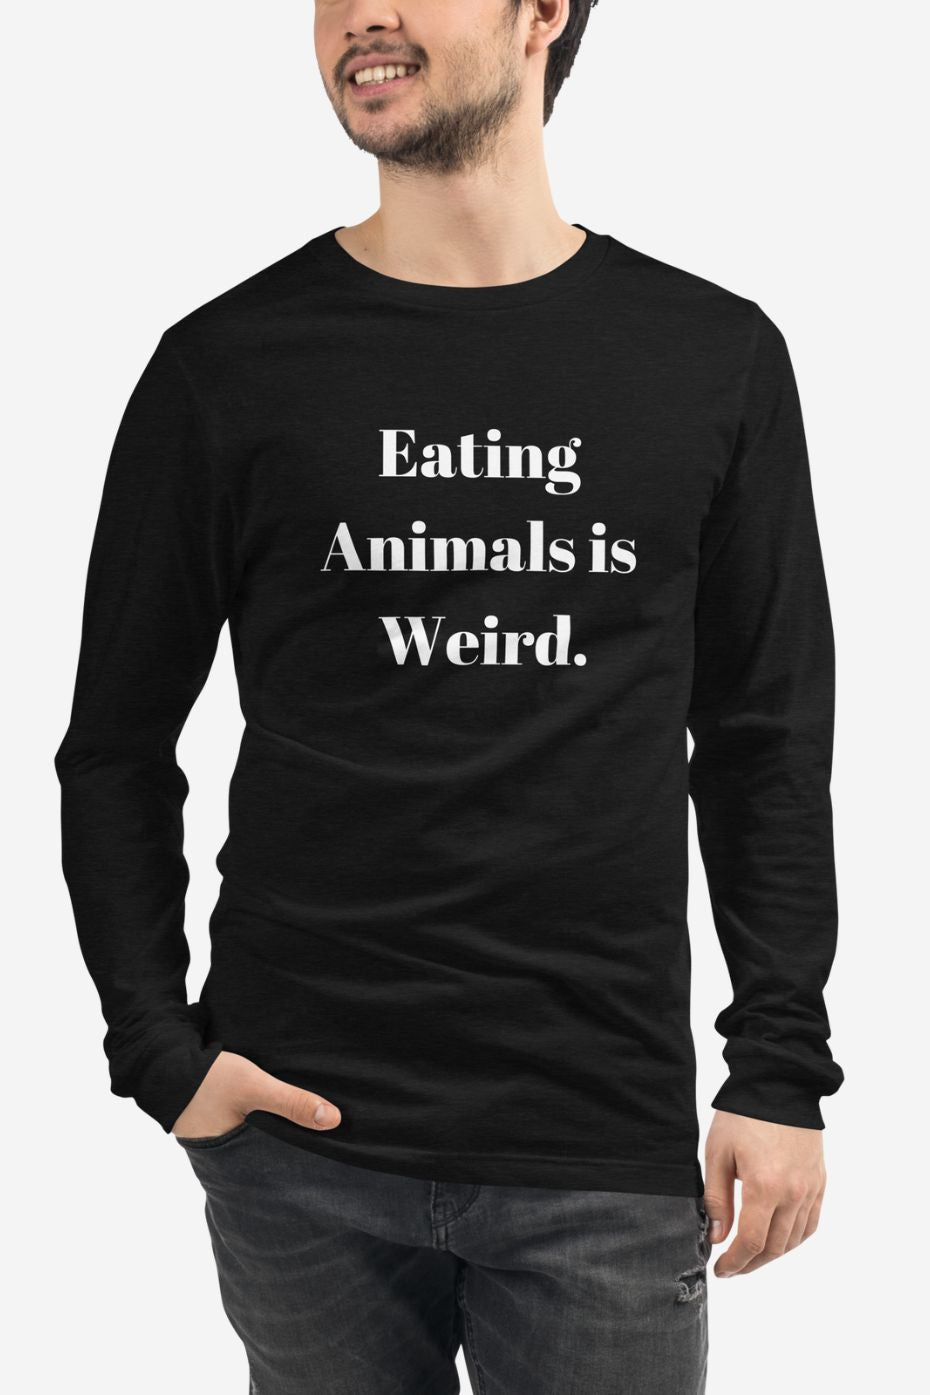 Eating Animals is Weird - Unisex Long Sleeve Tee